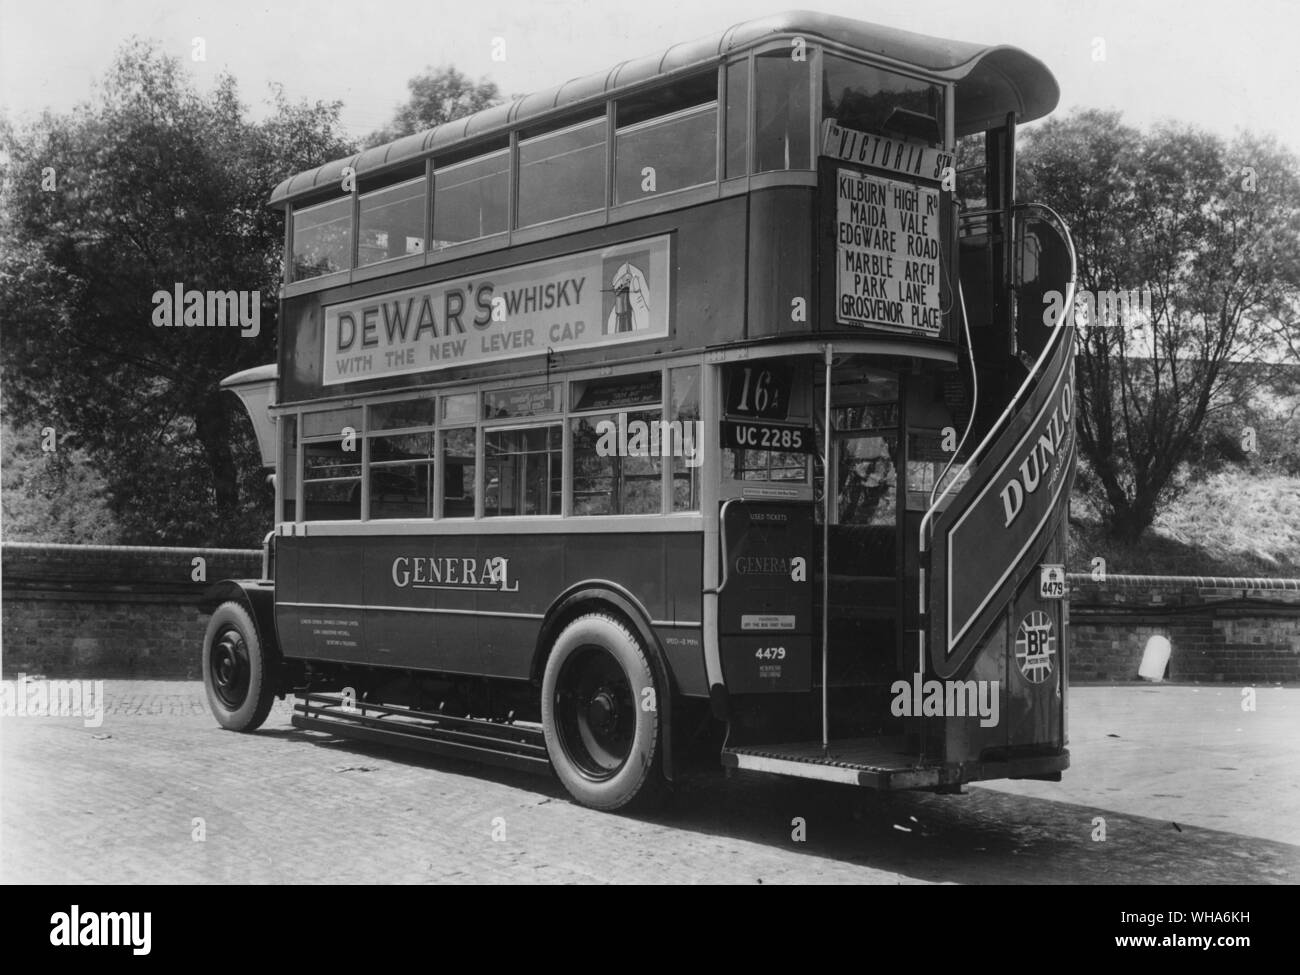 An omnibus passing 3 Compasses Inn. London 1850 Stock Photo